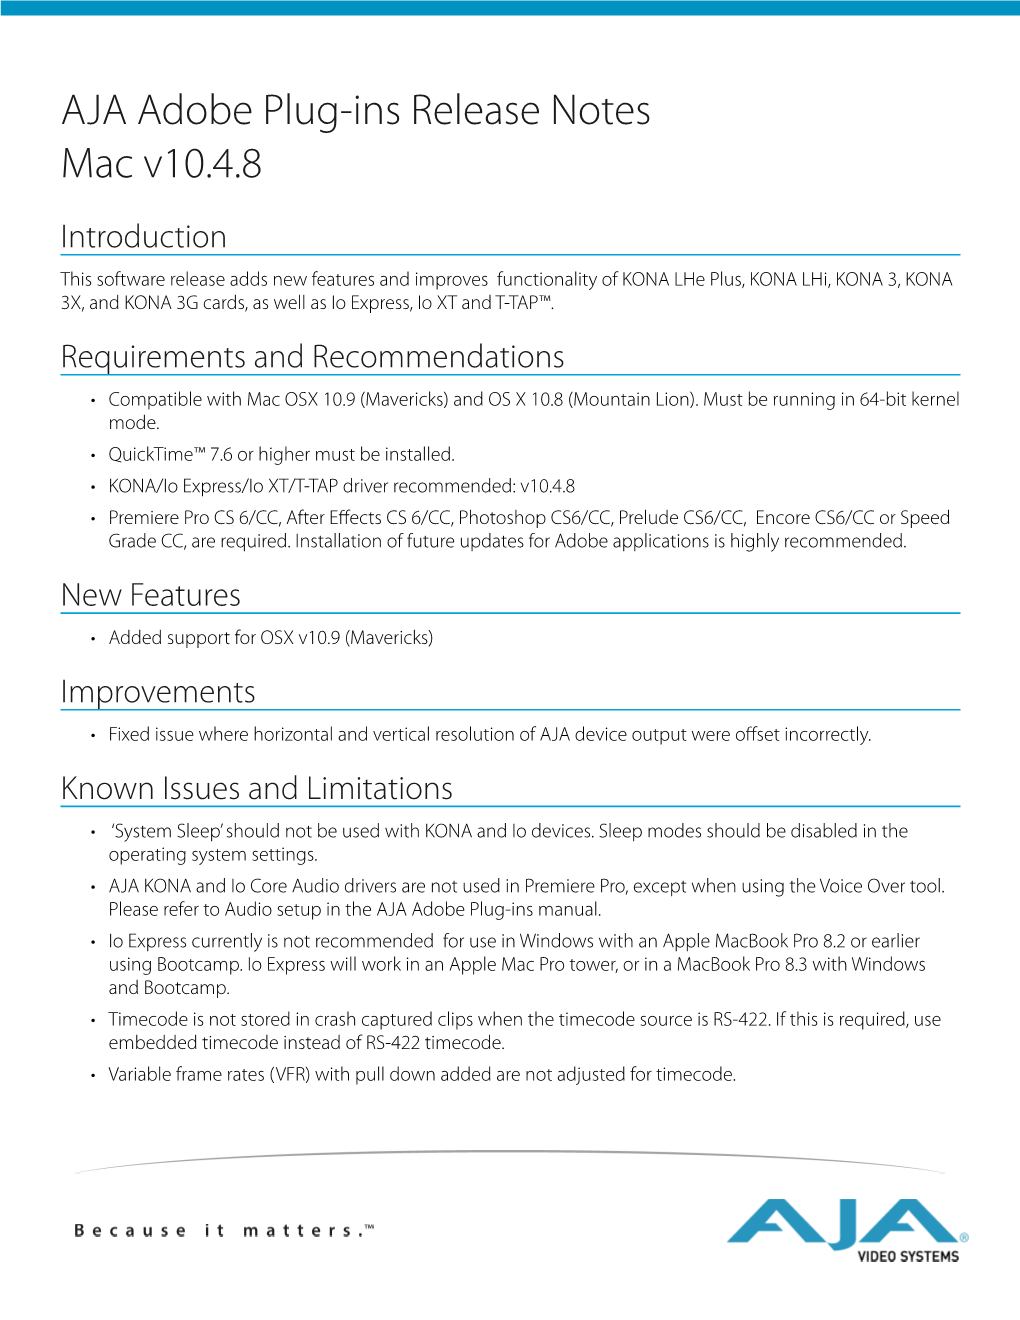 AJA Adobe Plug-Ins Release Notes Mac V10.4.8